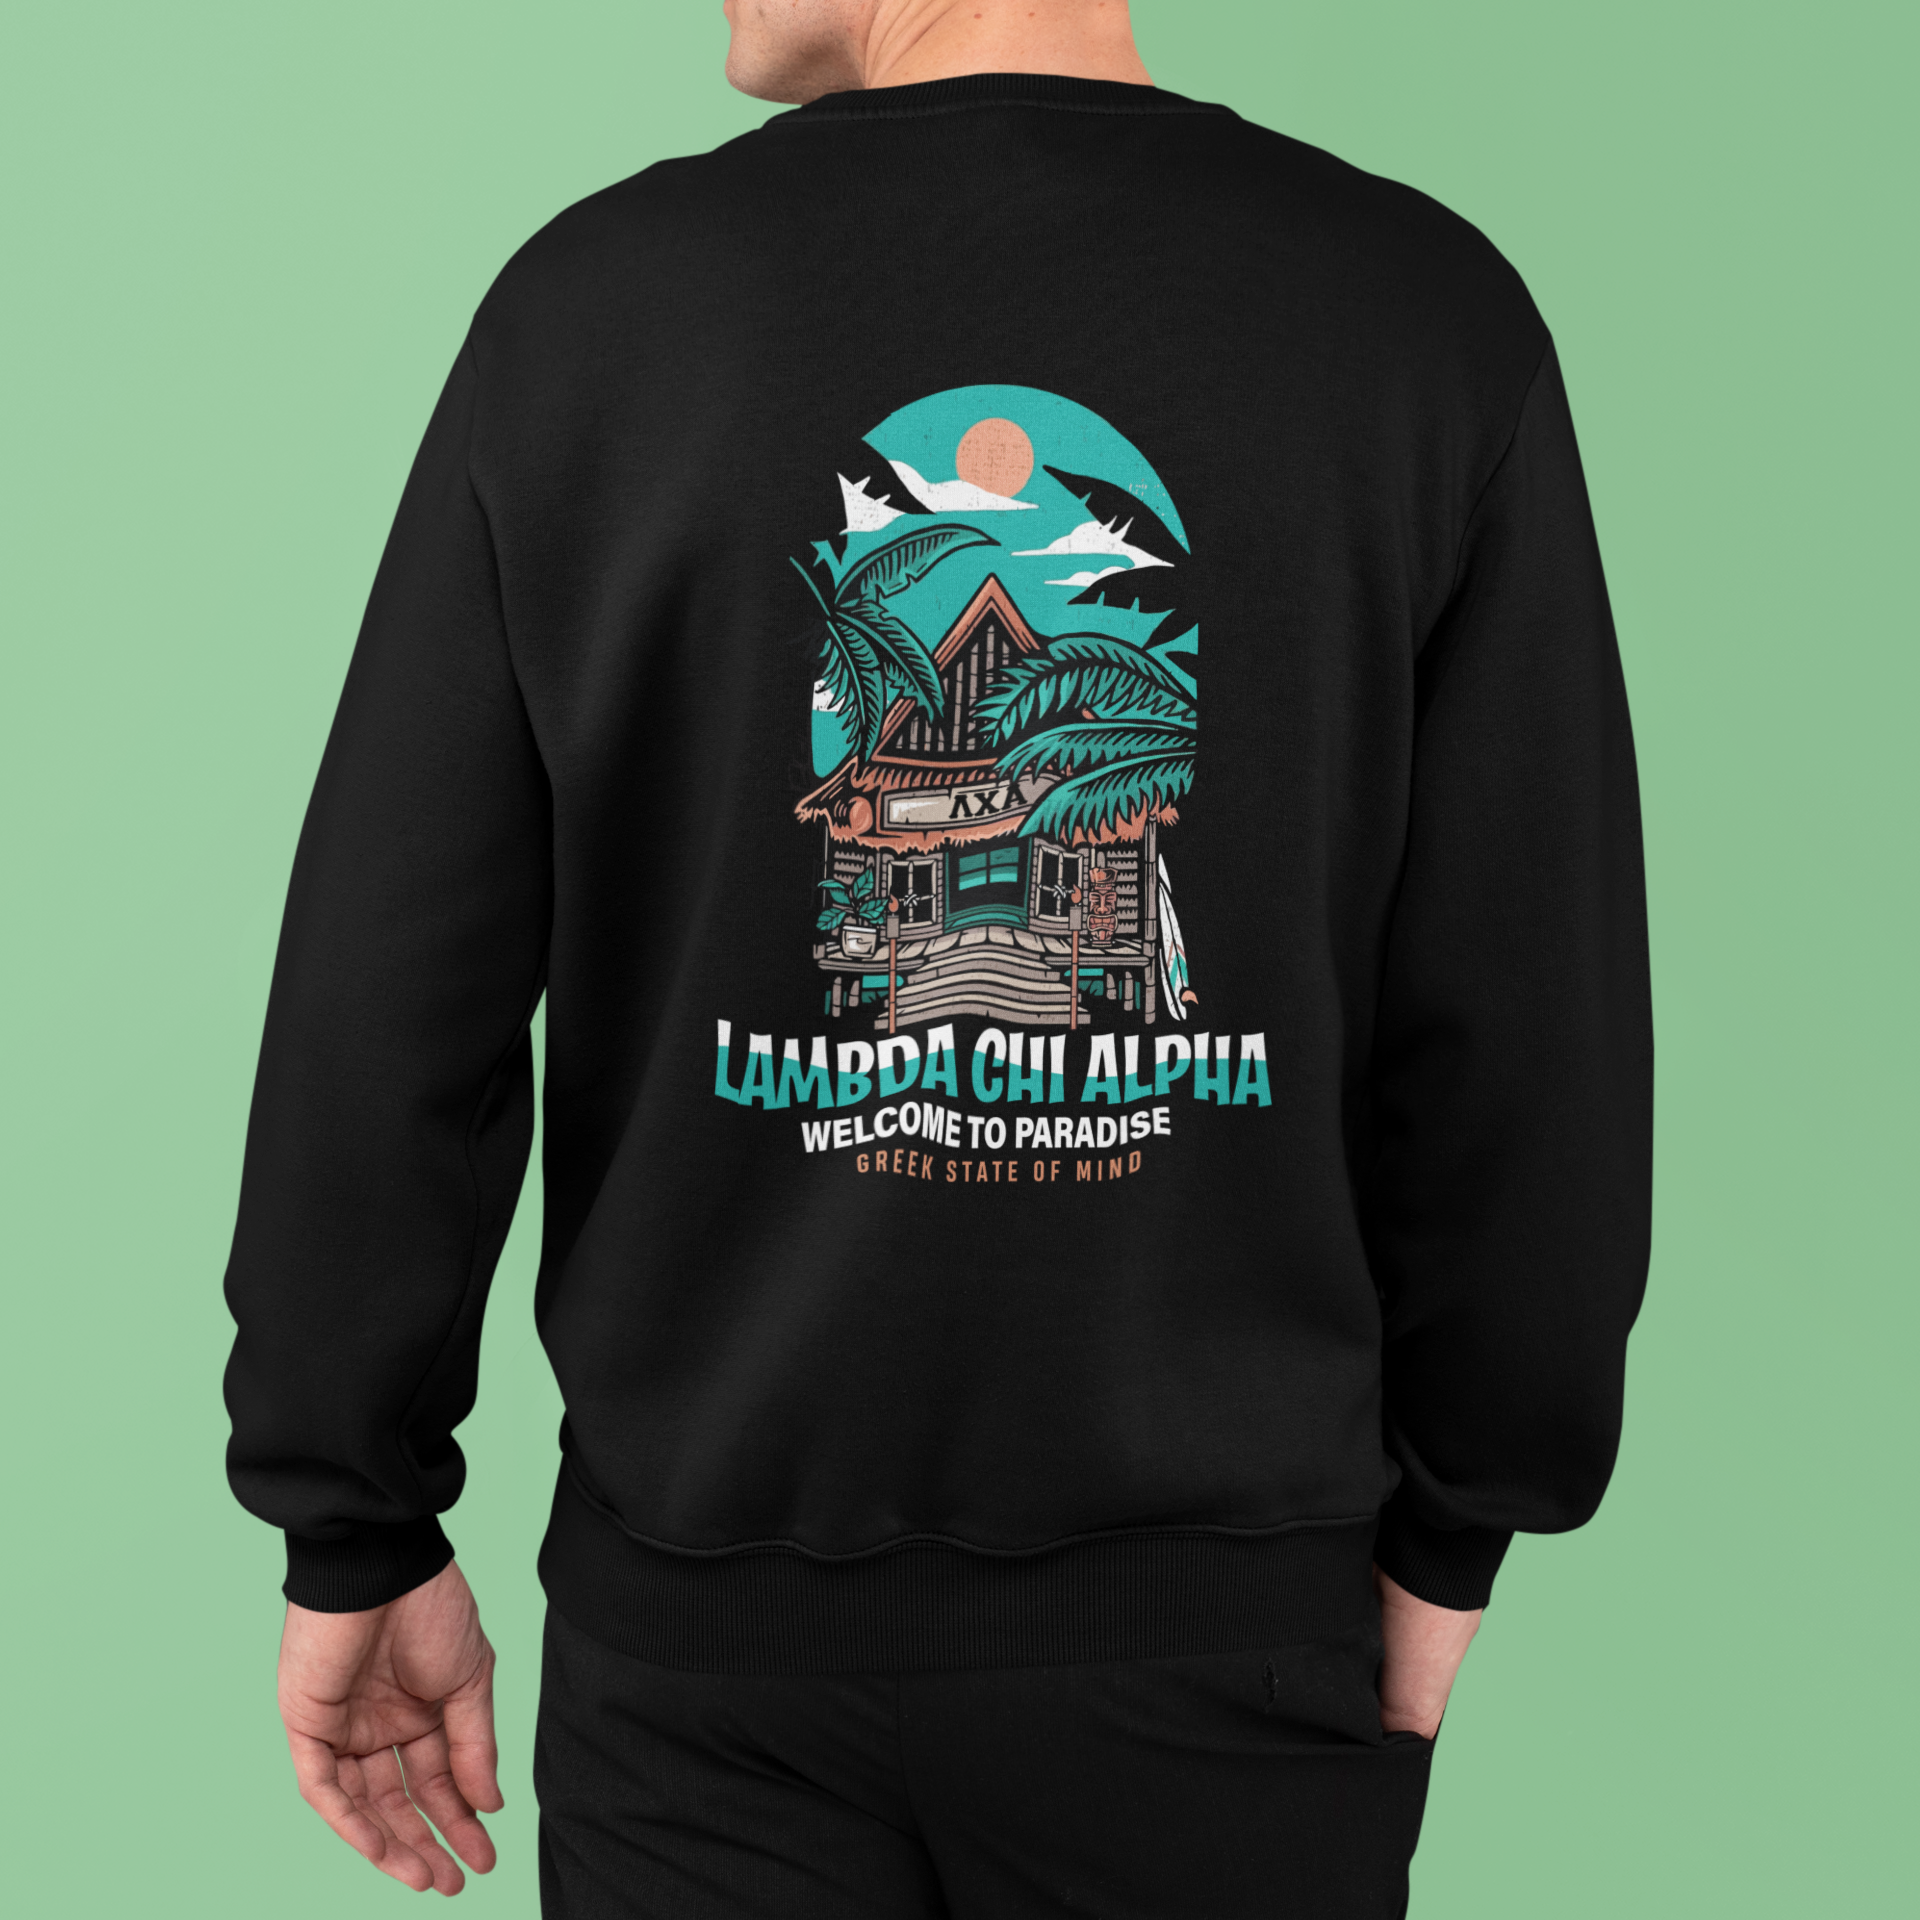 black Lambda Chi Alpha Graphic Crewneck Sweatshirt | Welcome to Paradise | Lambda Chi Alpha Fraternity Shirt model 